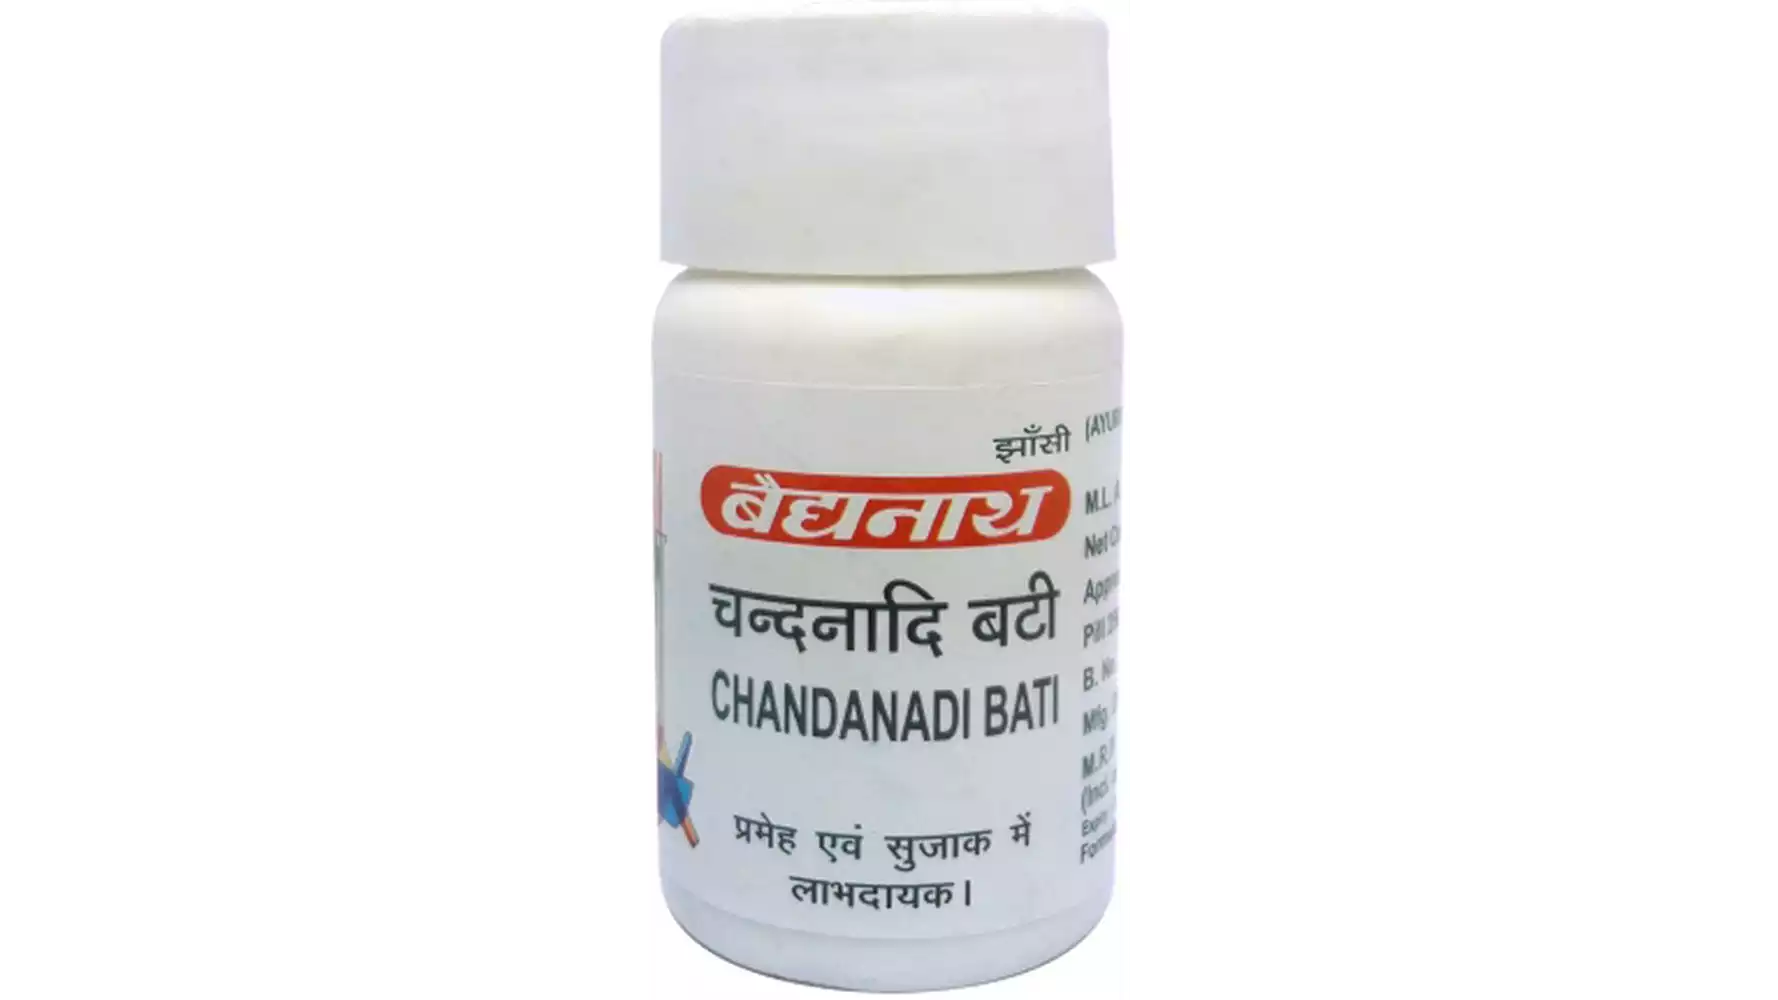 Baidyanath Chandanadi Vati (10g)